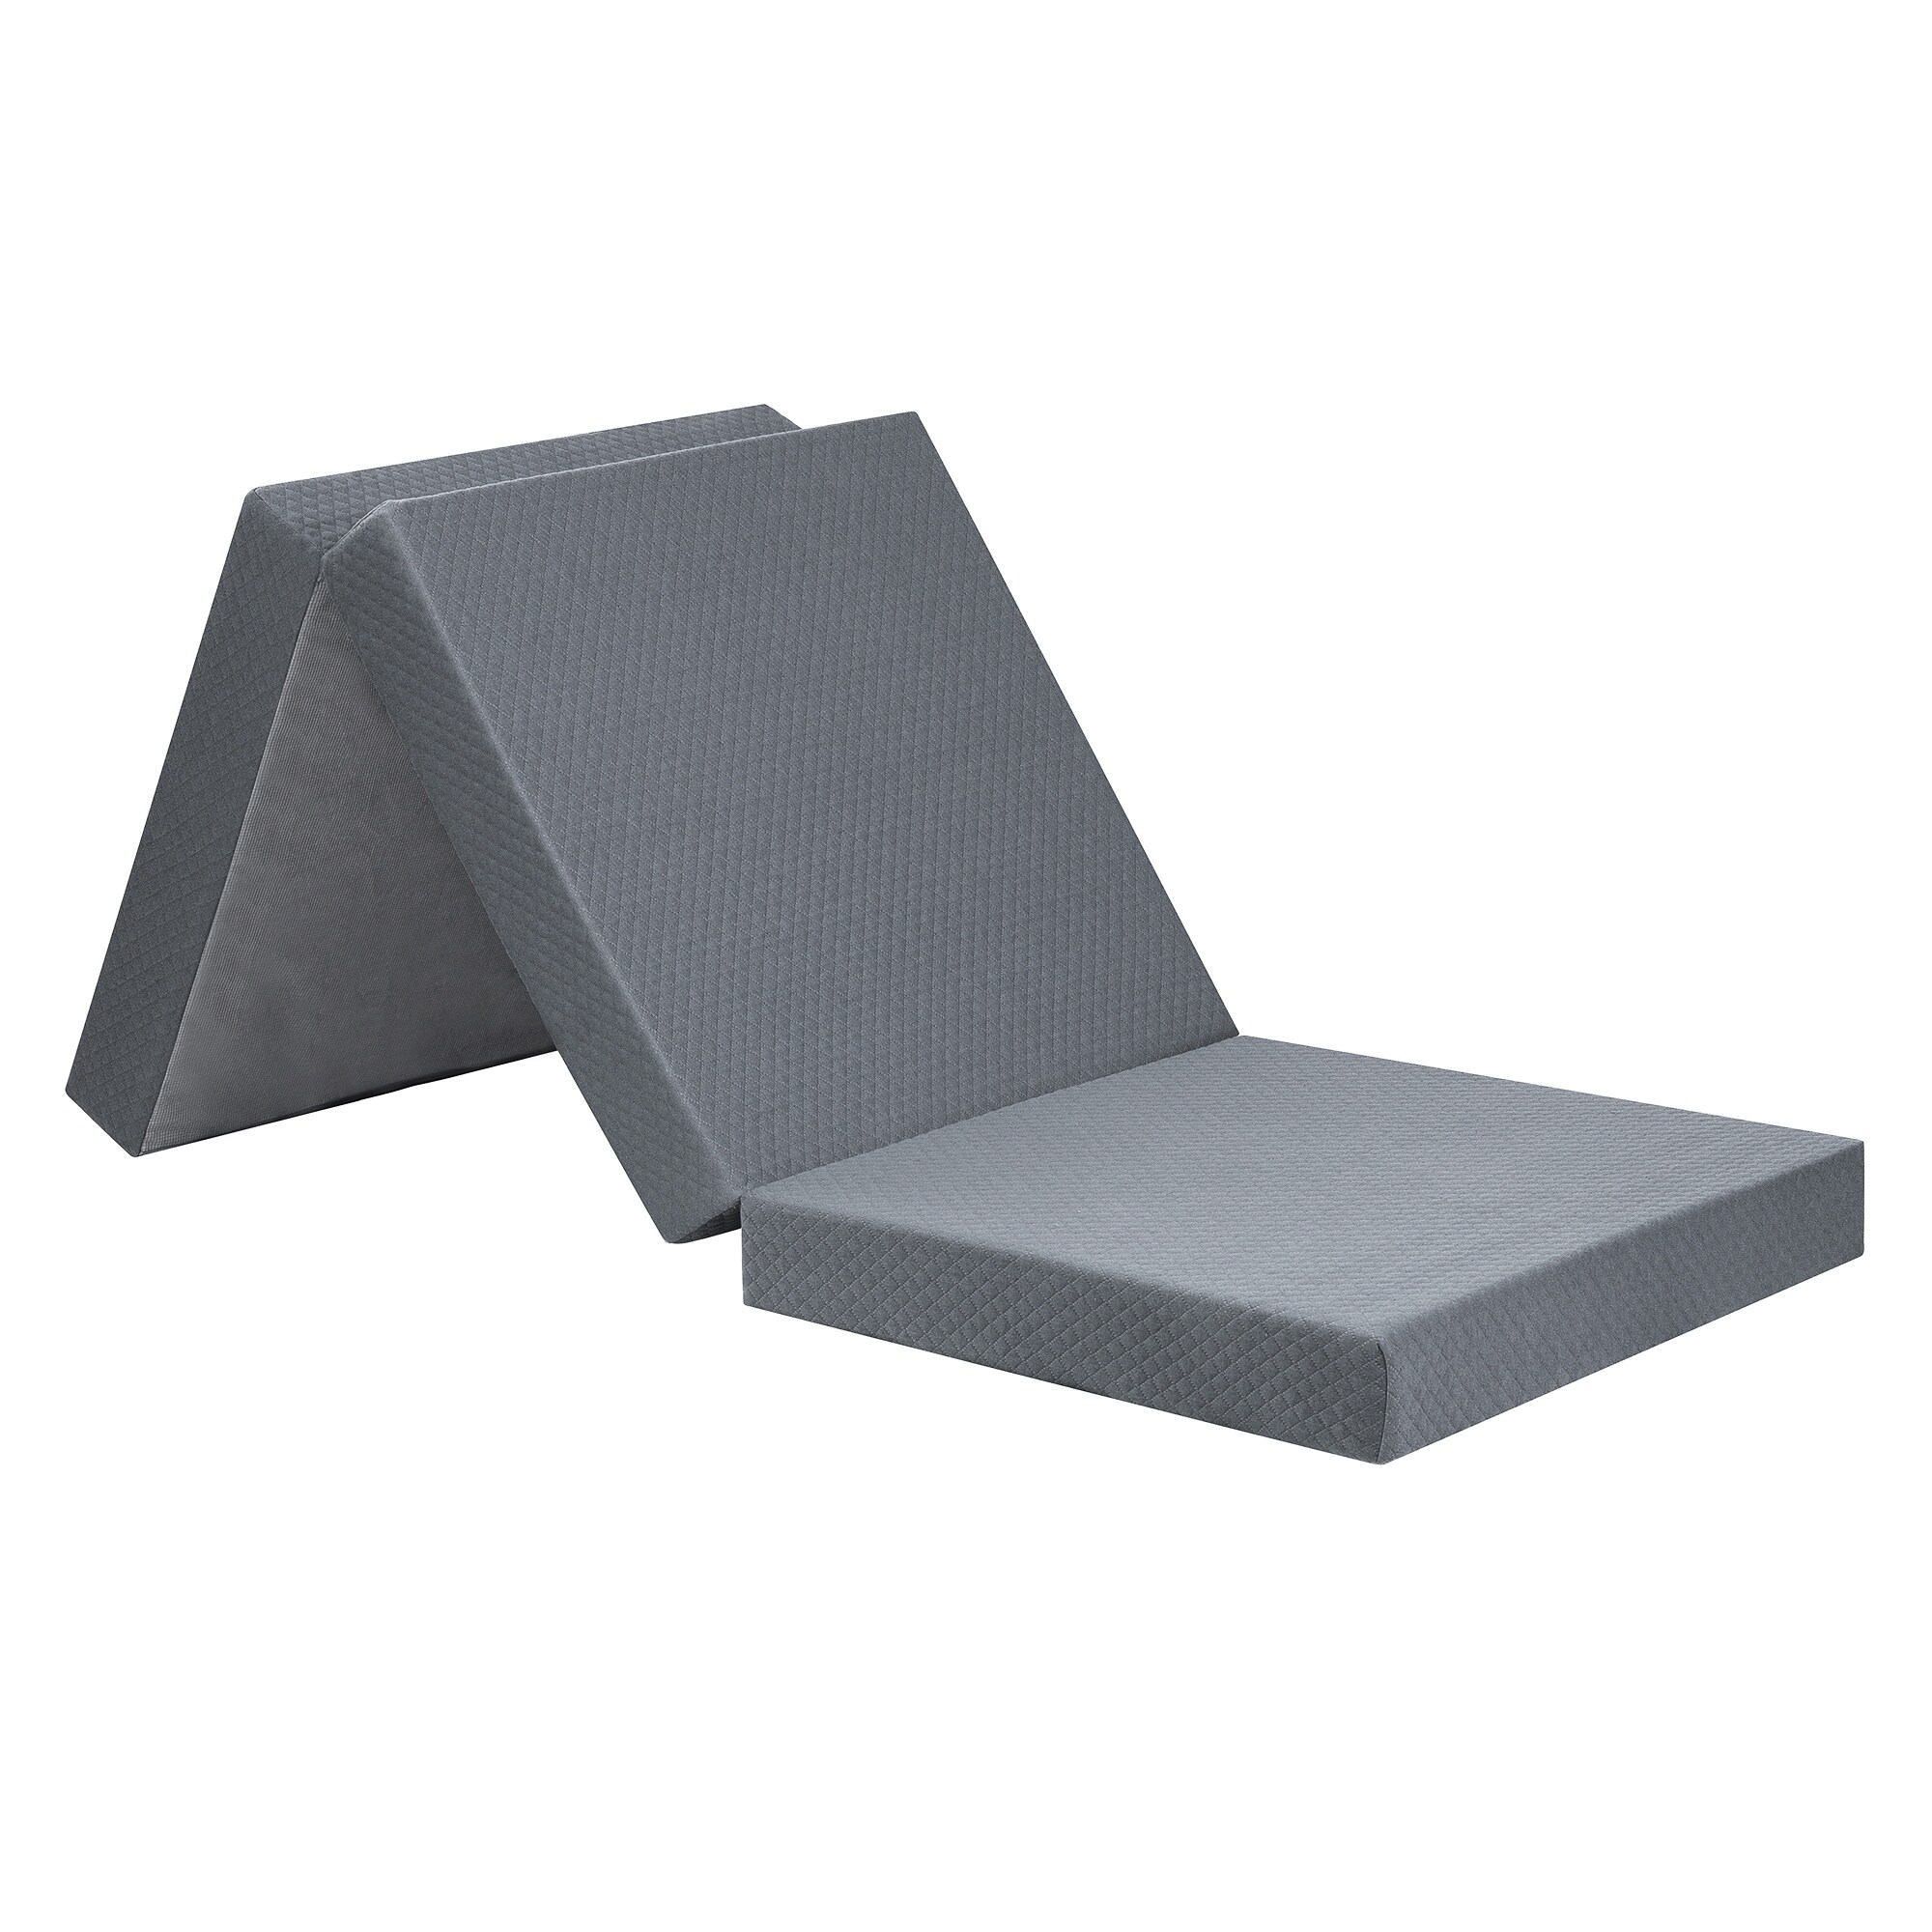 Details about   Tri Folding Memory Foam Mattress Topper 4 Inch Single Bed Size Standard Bedroom 